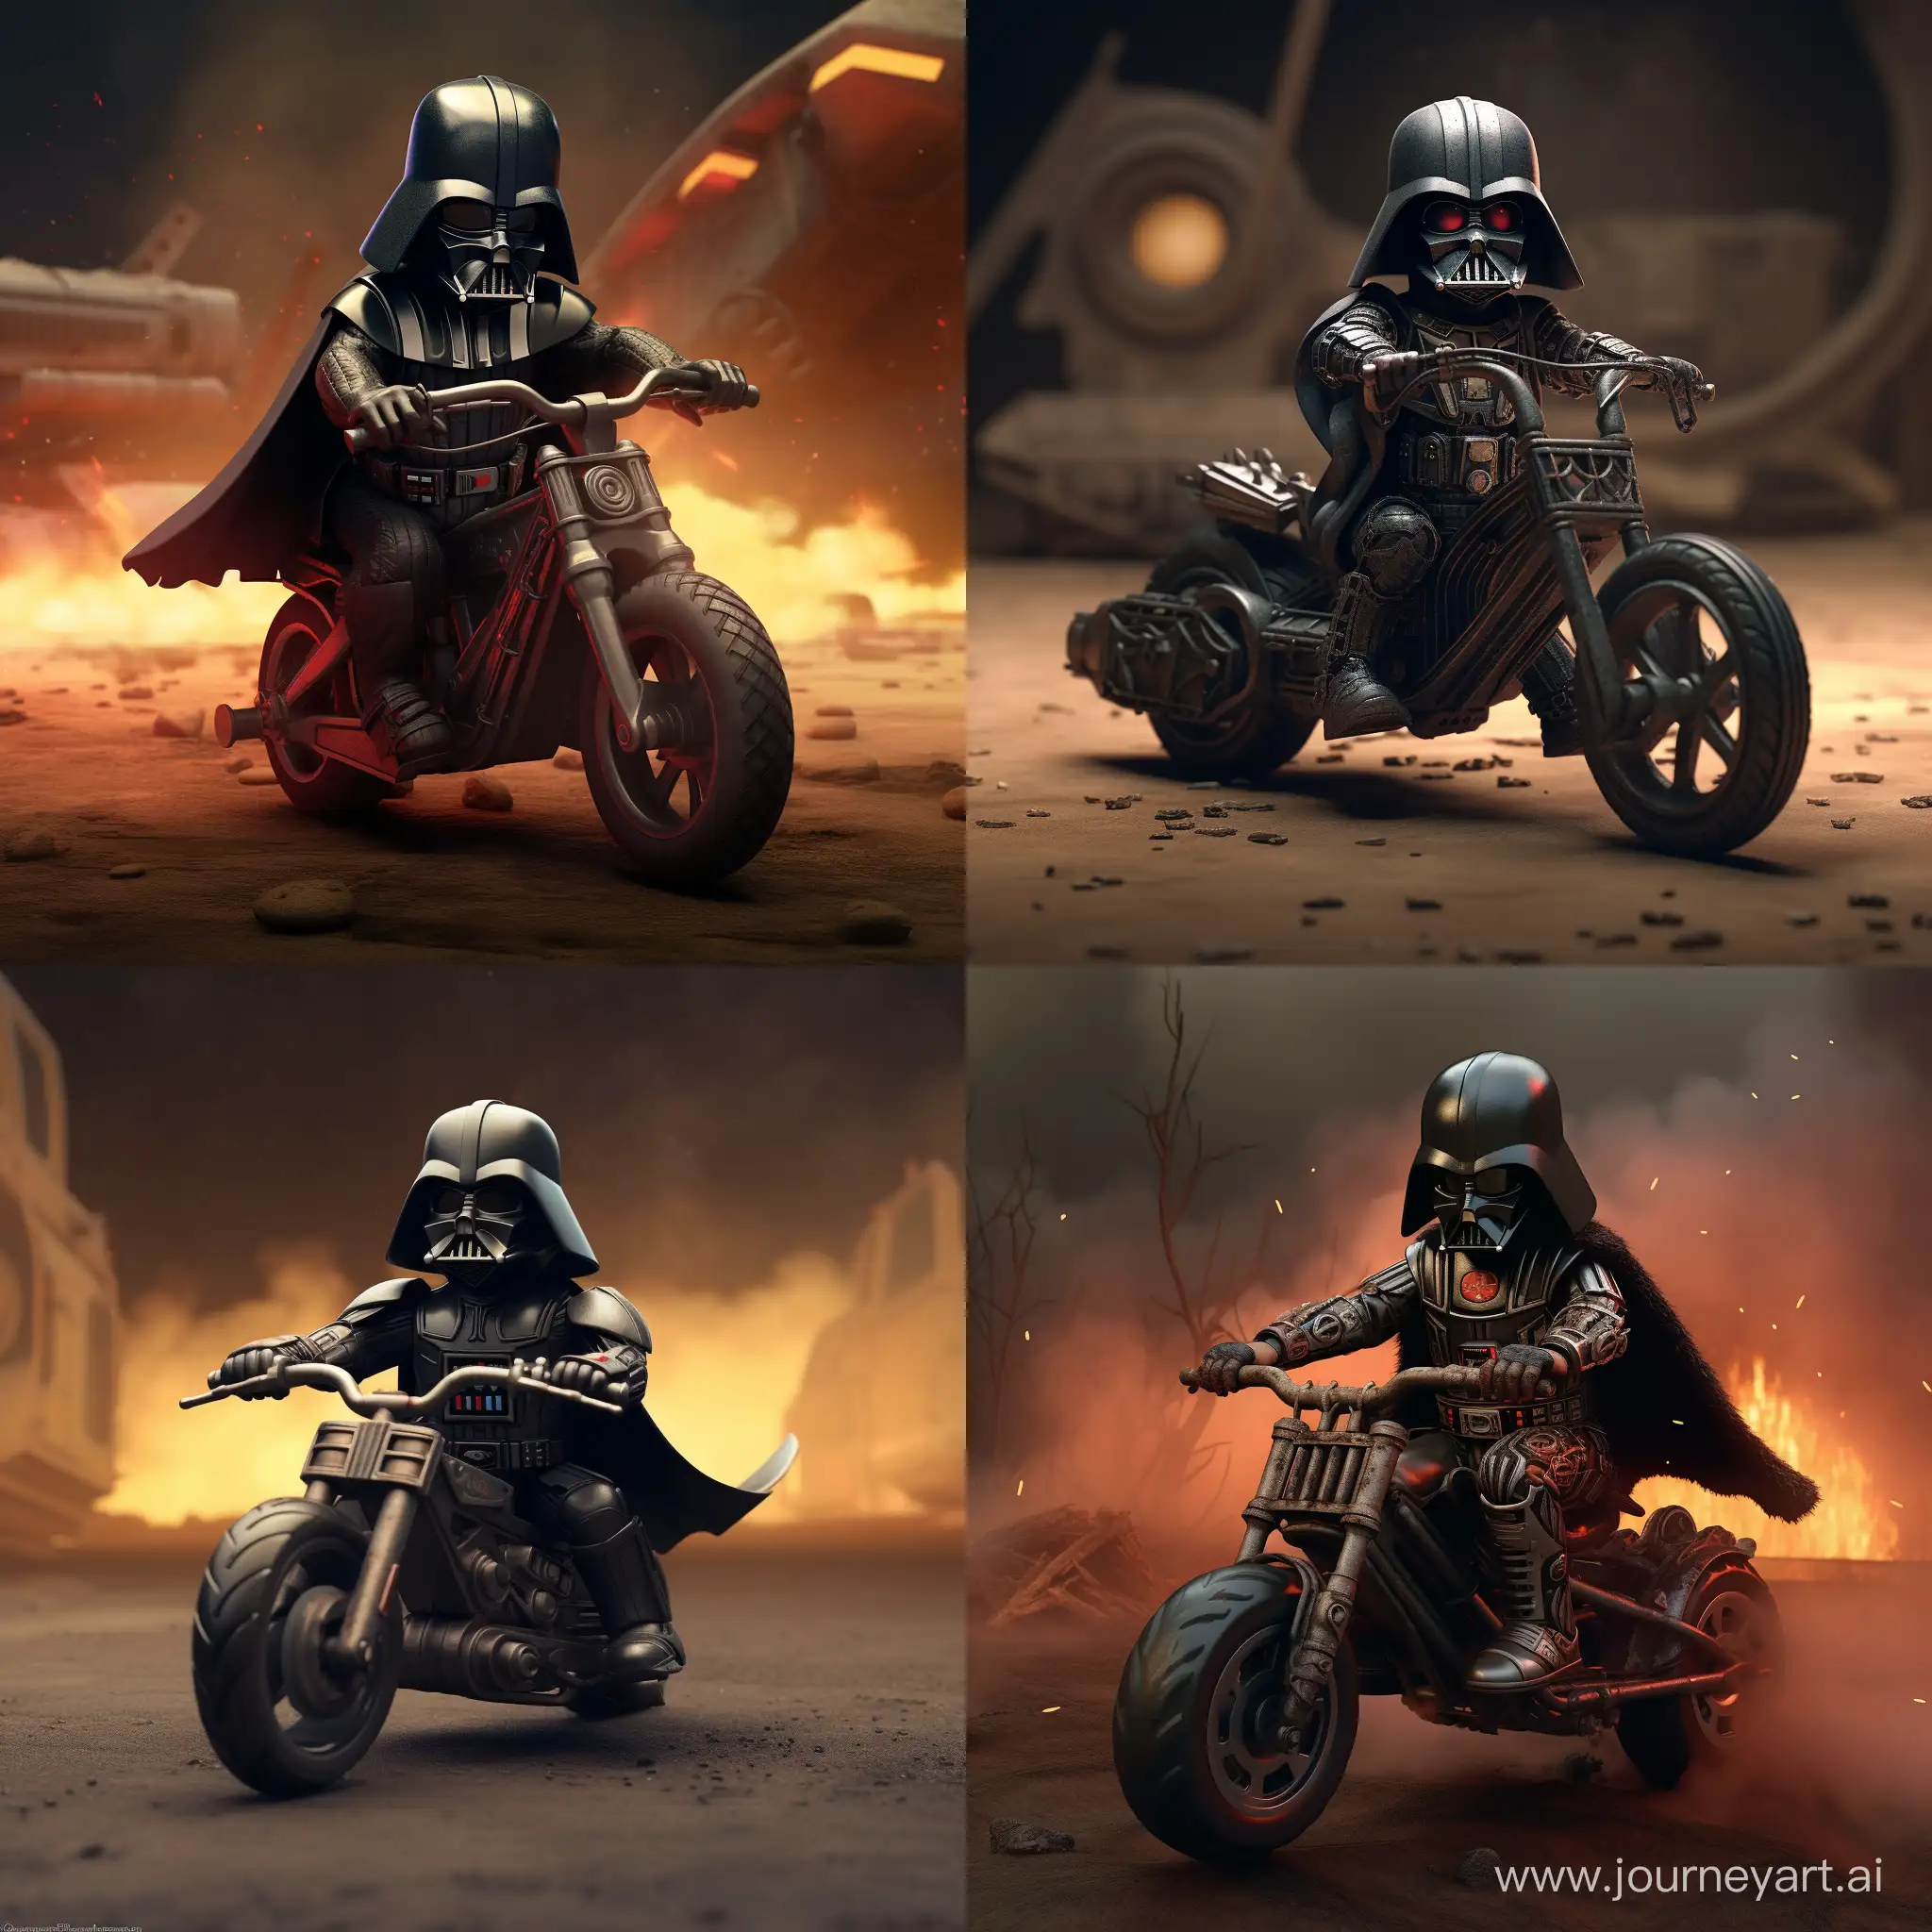 Darth Vader riding a mini bike